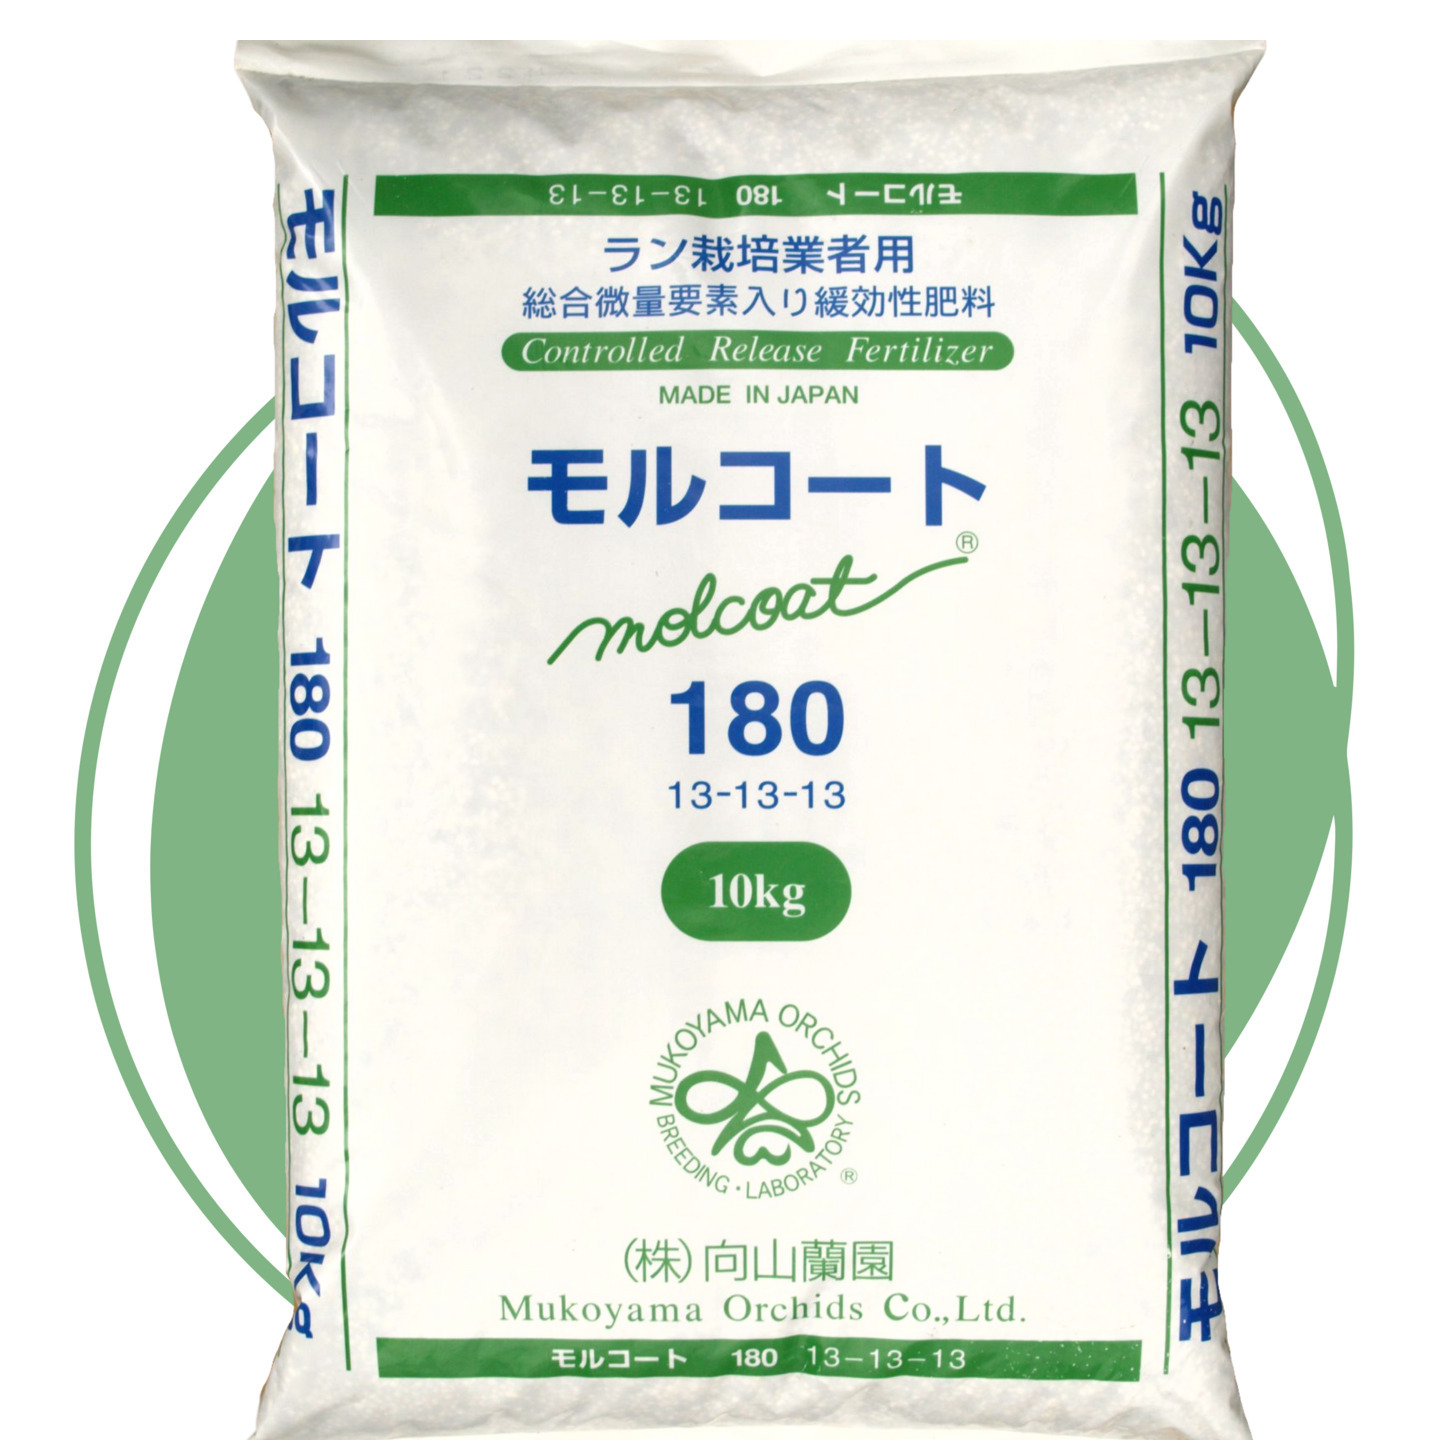 MOLCOAT 180 PROFESSIONAL   13-13-13 +Mg and TE 180 days release fertiliser.